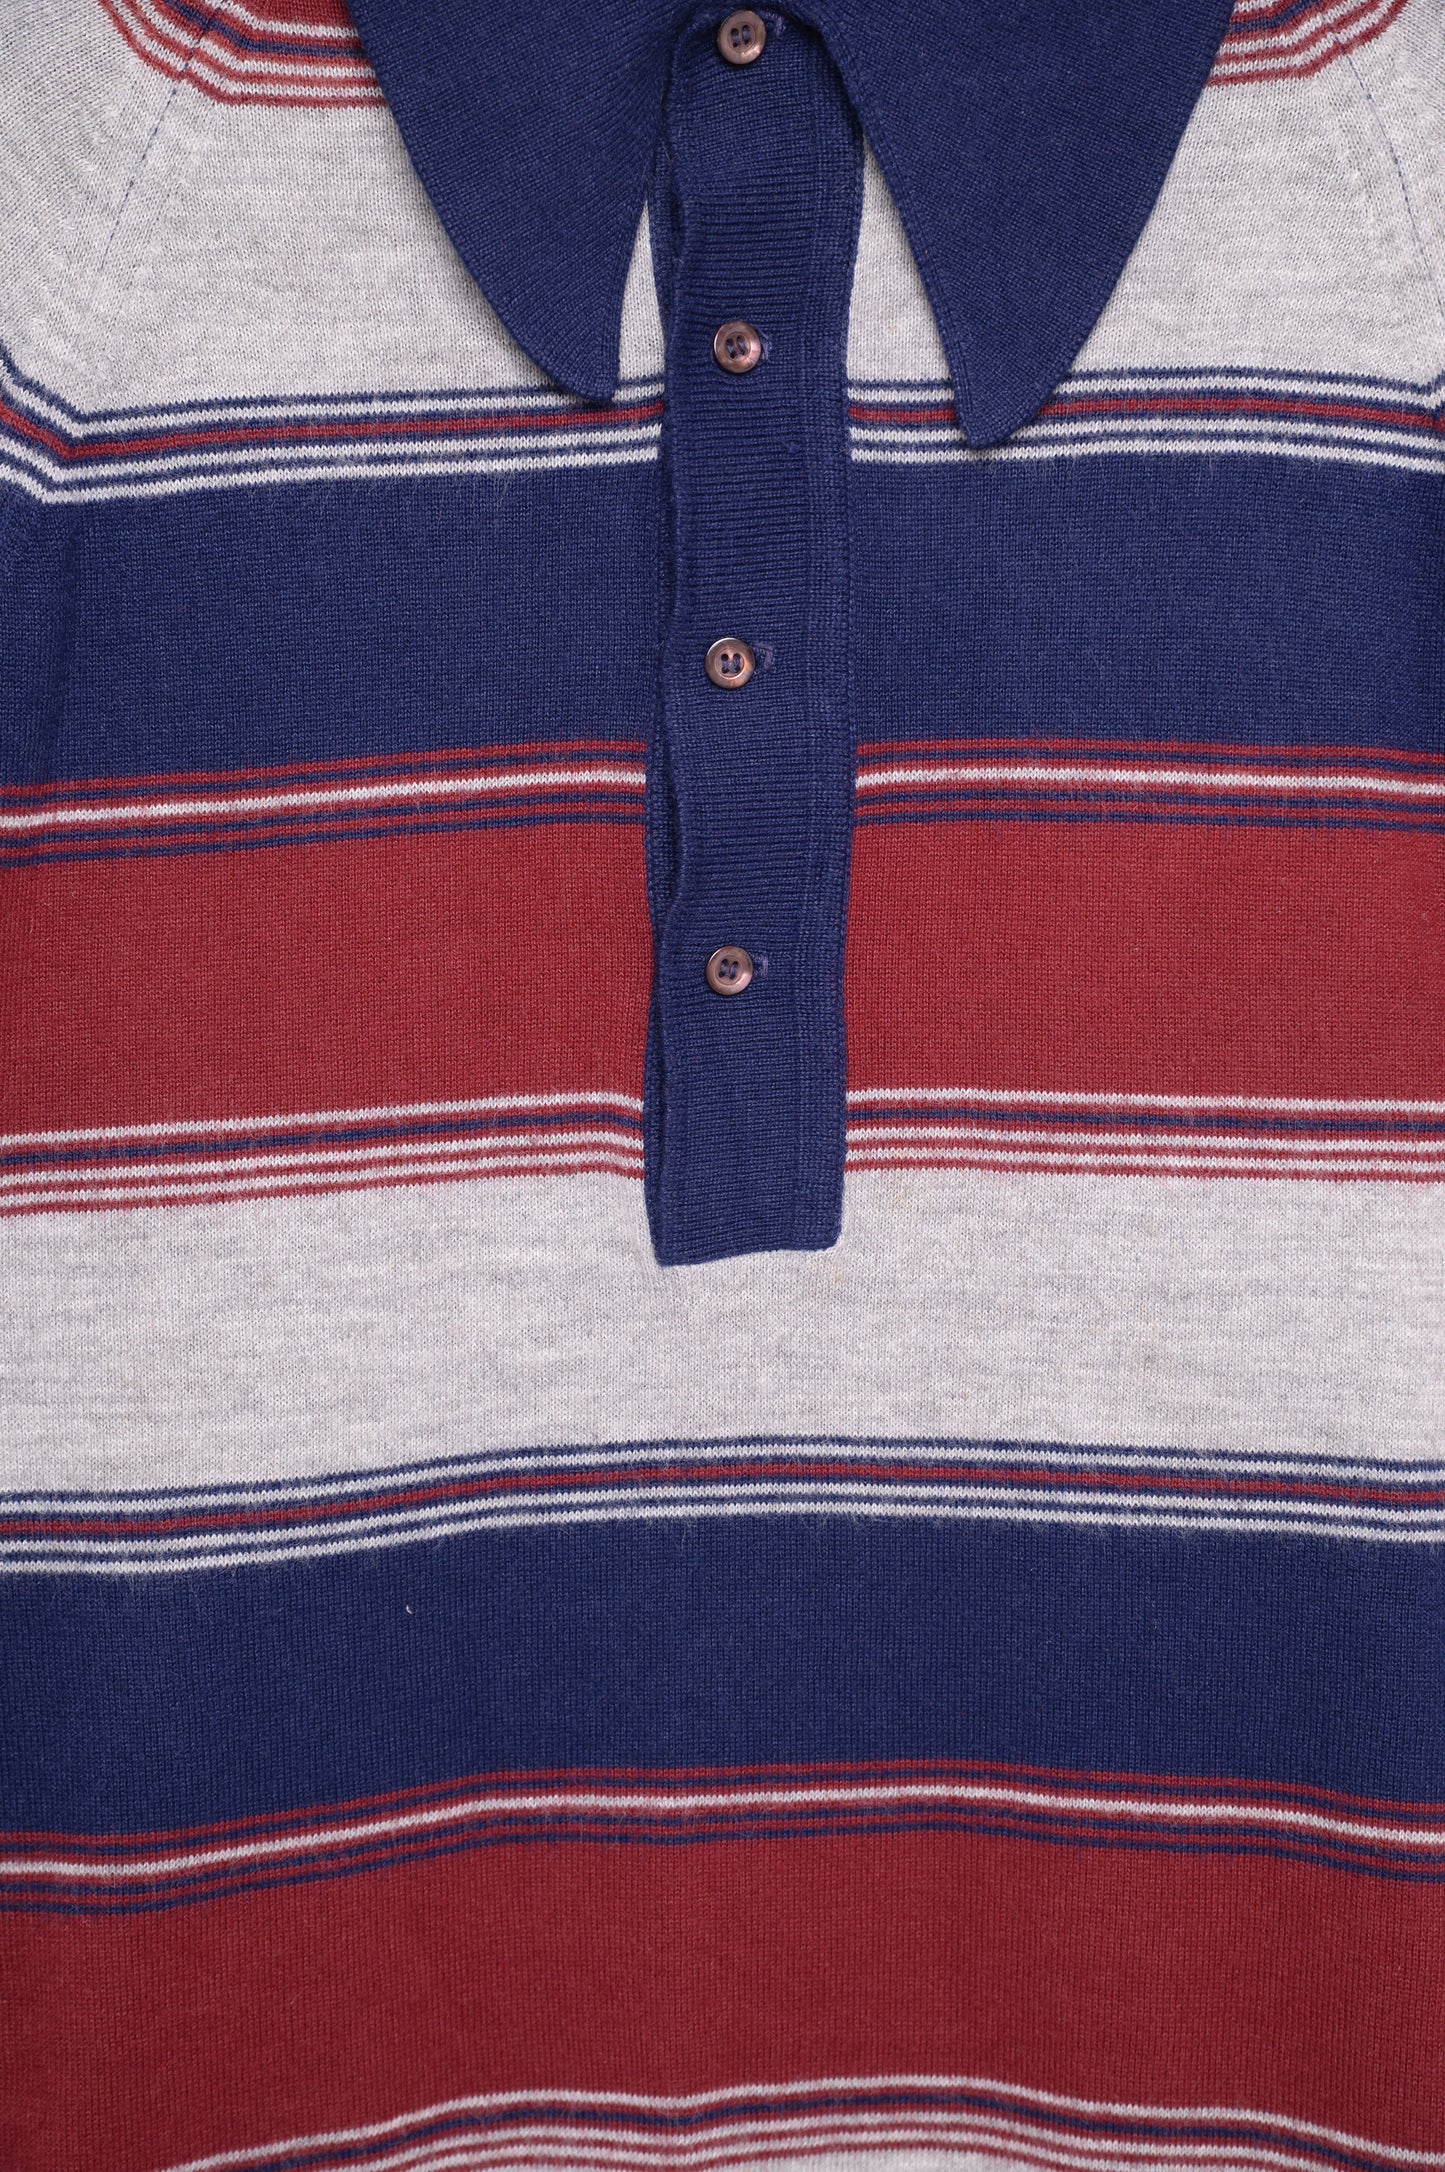 1970s Collared Sweater